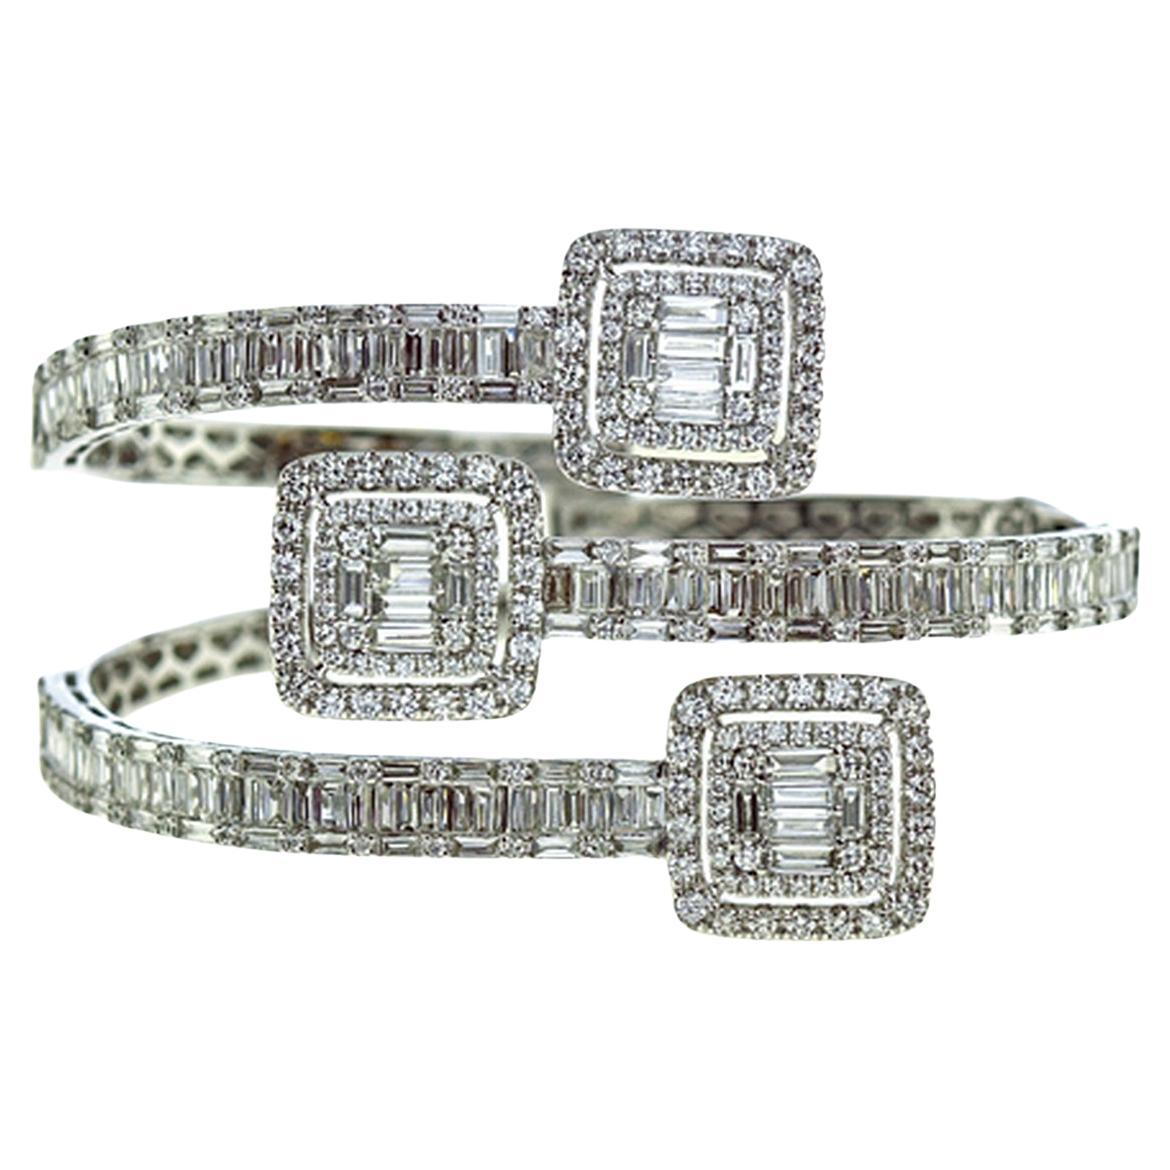 NWT $101 000 18KT Gold Fancy Glittering Diamond Cuff Bracelet Bangle Cuff